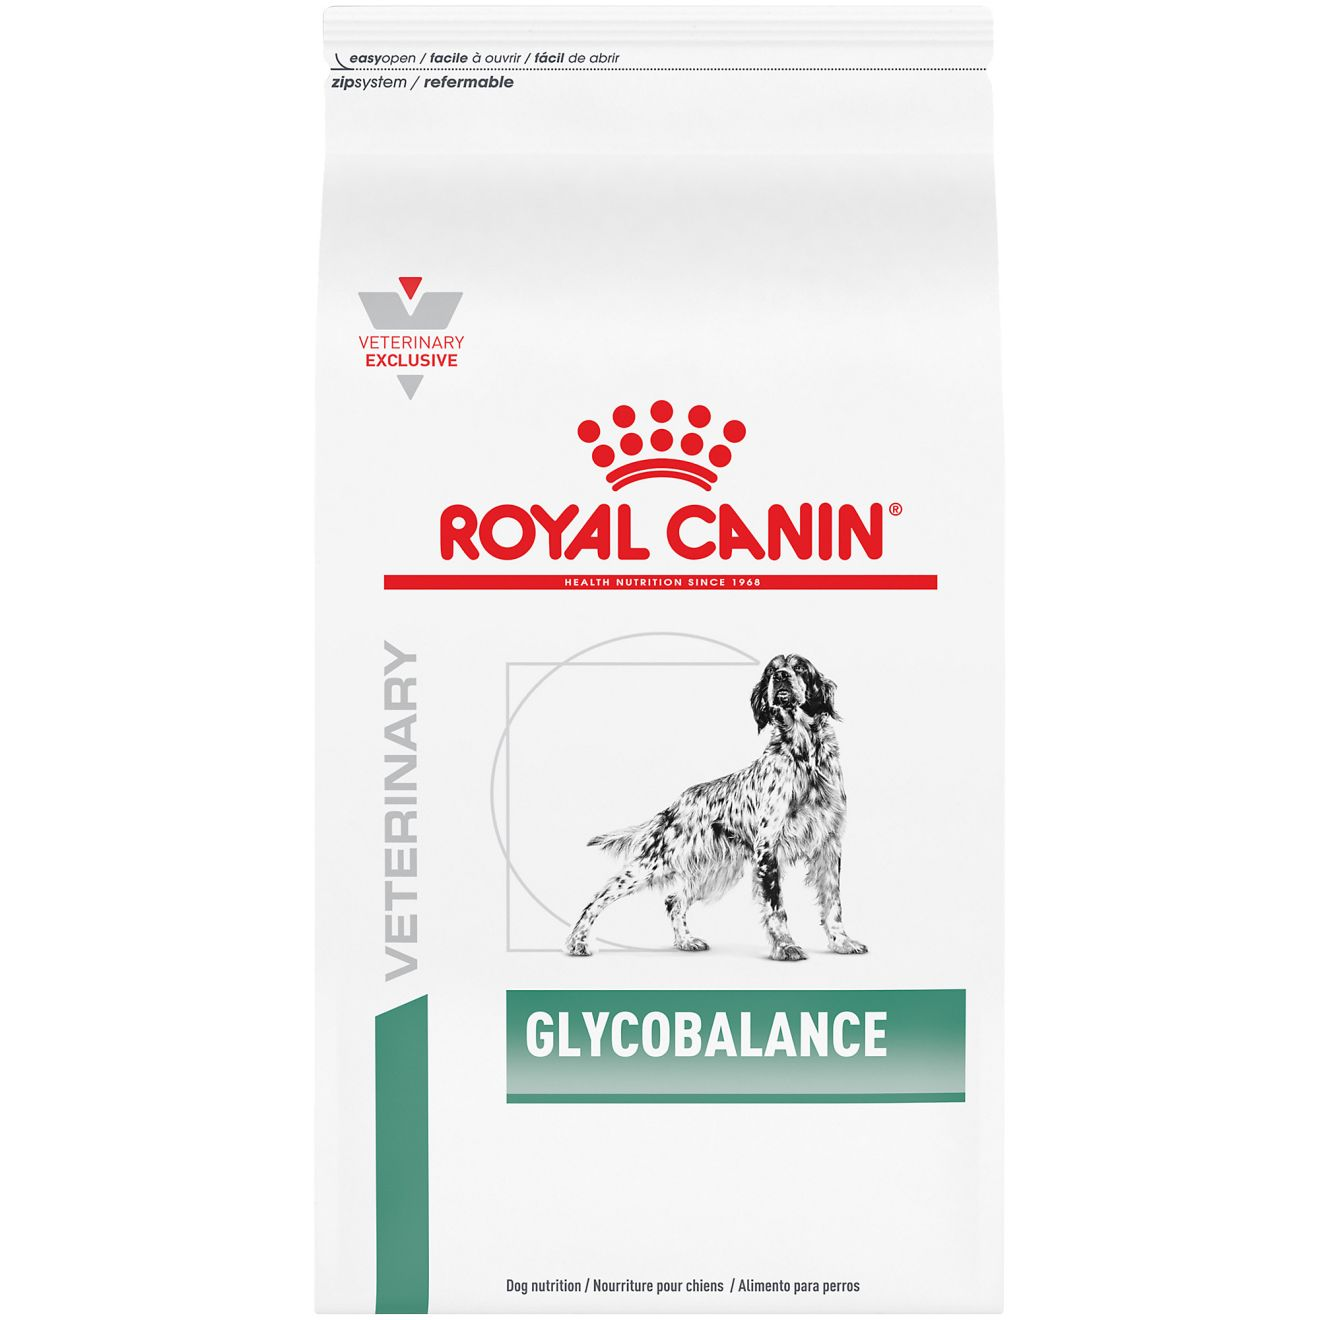 Canine Glycobalance